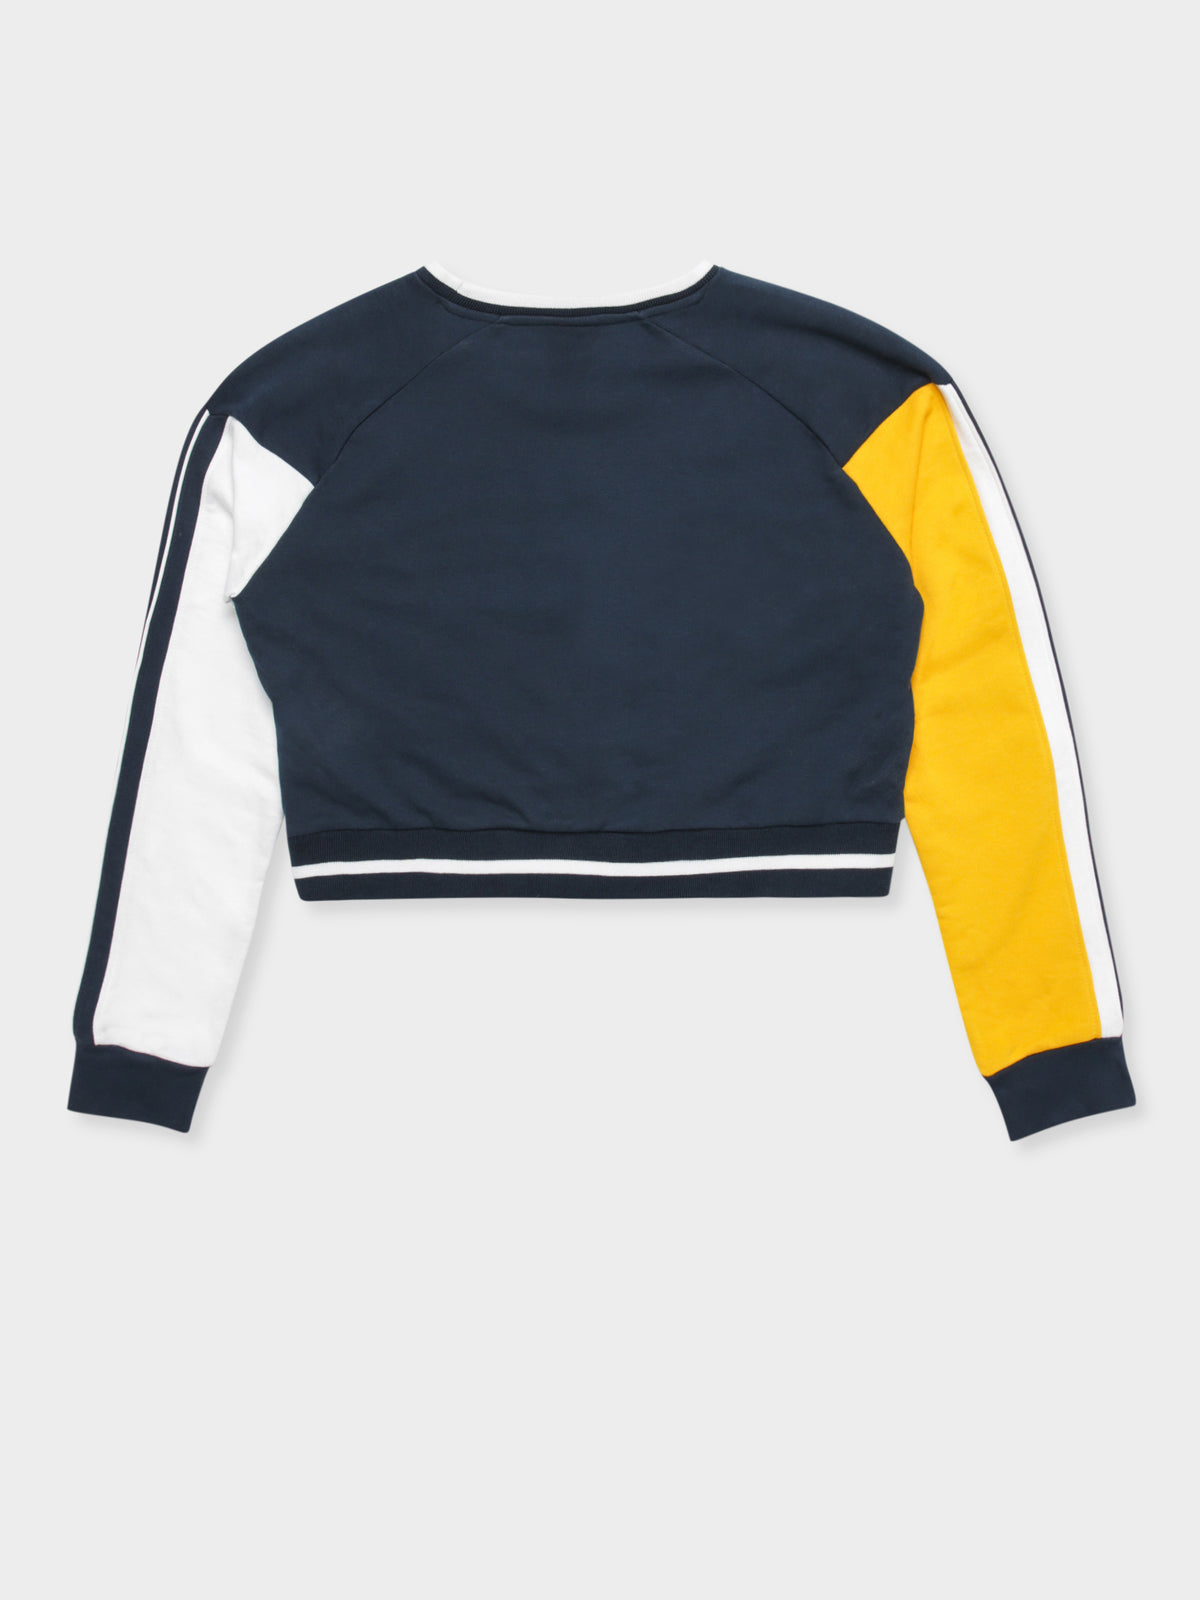 Mania Cropped Sweatshirt in Navy